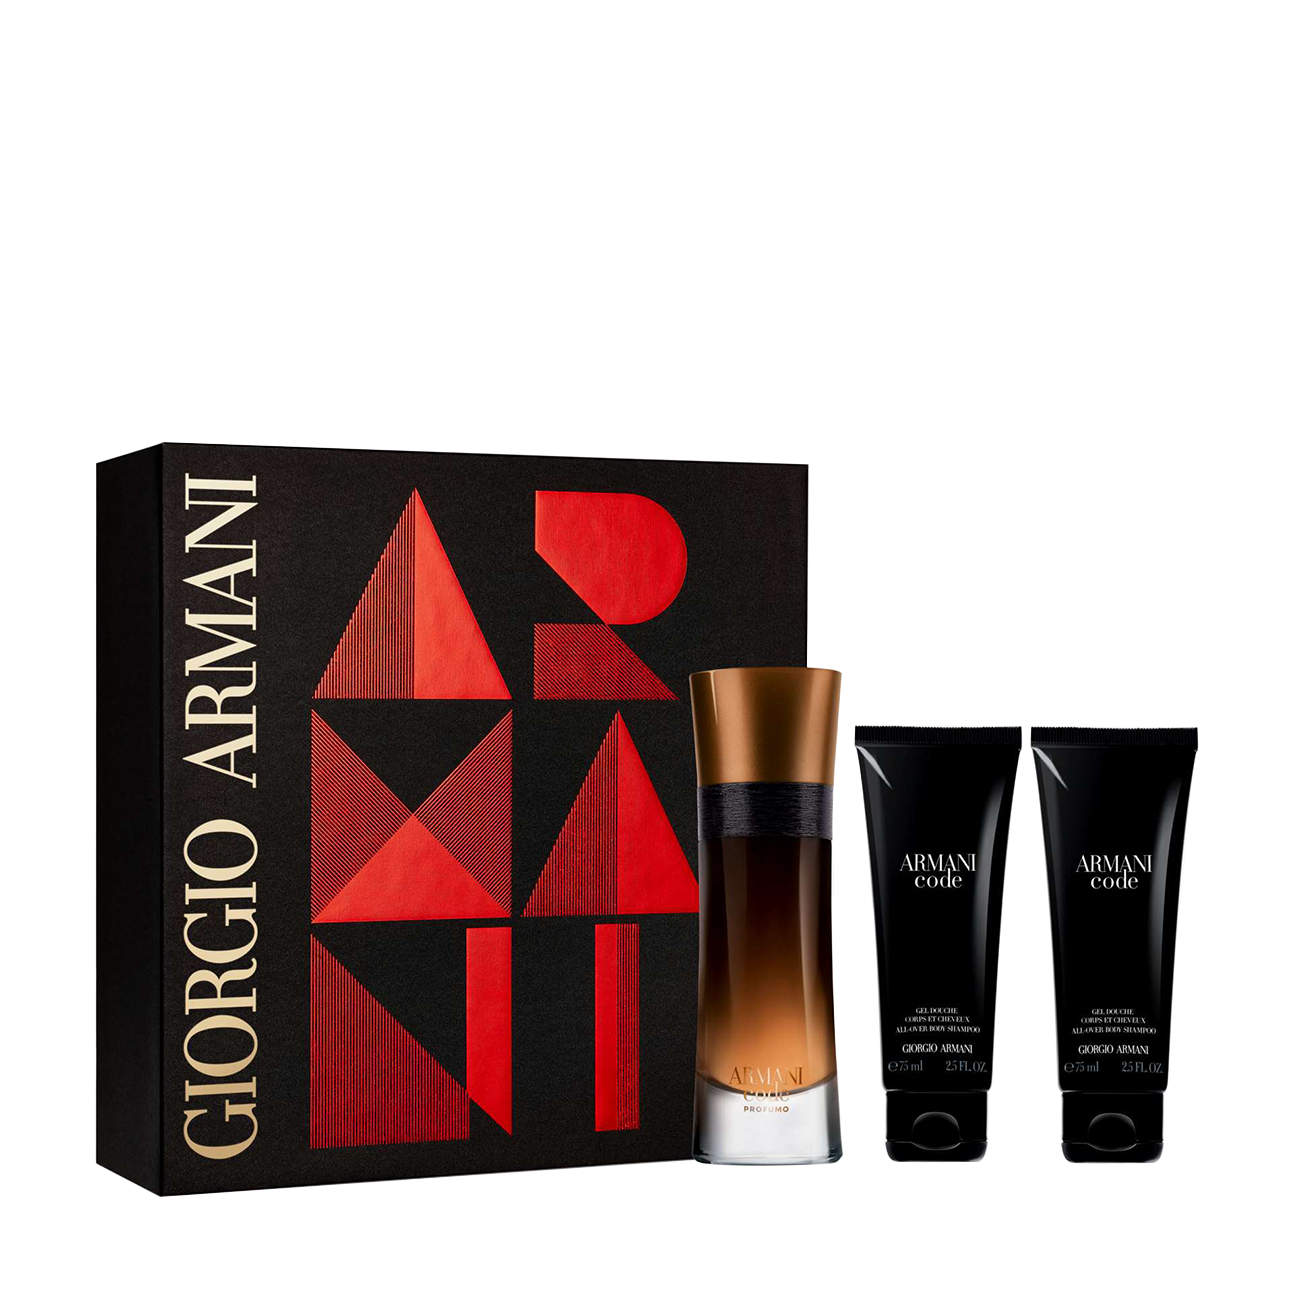 Set parfumuri Giorgio Armani ARMANI CODE PROFUMO SET 210ml cu comanda online